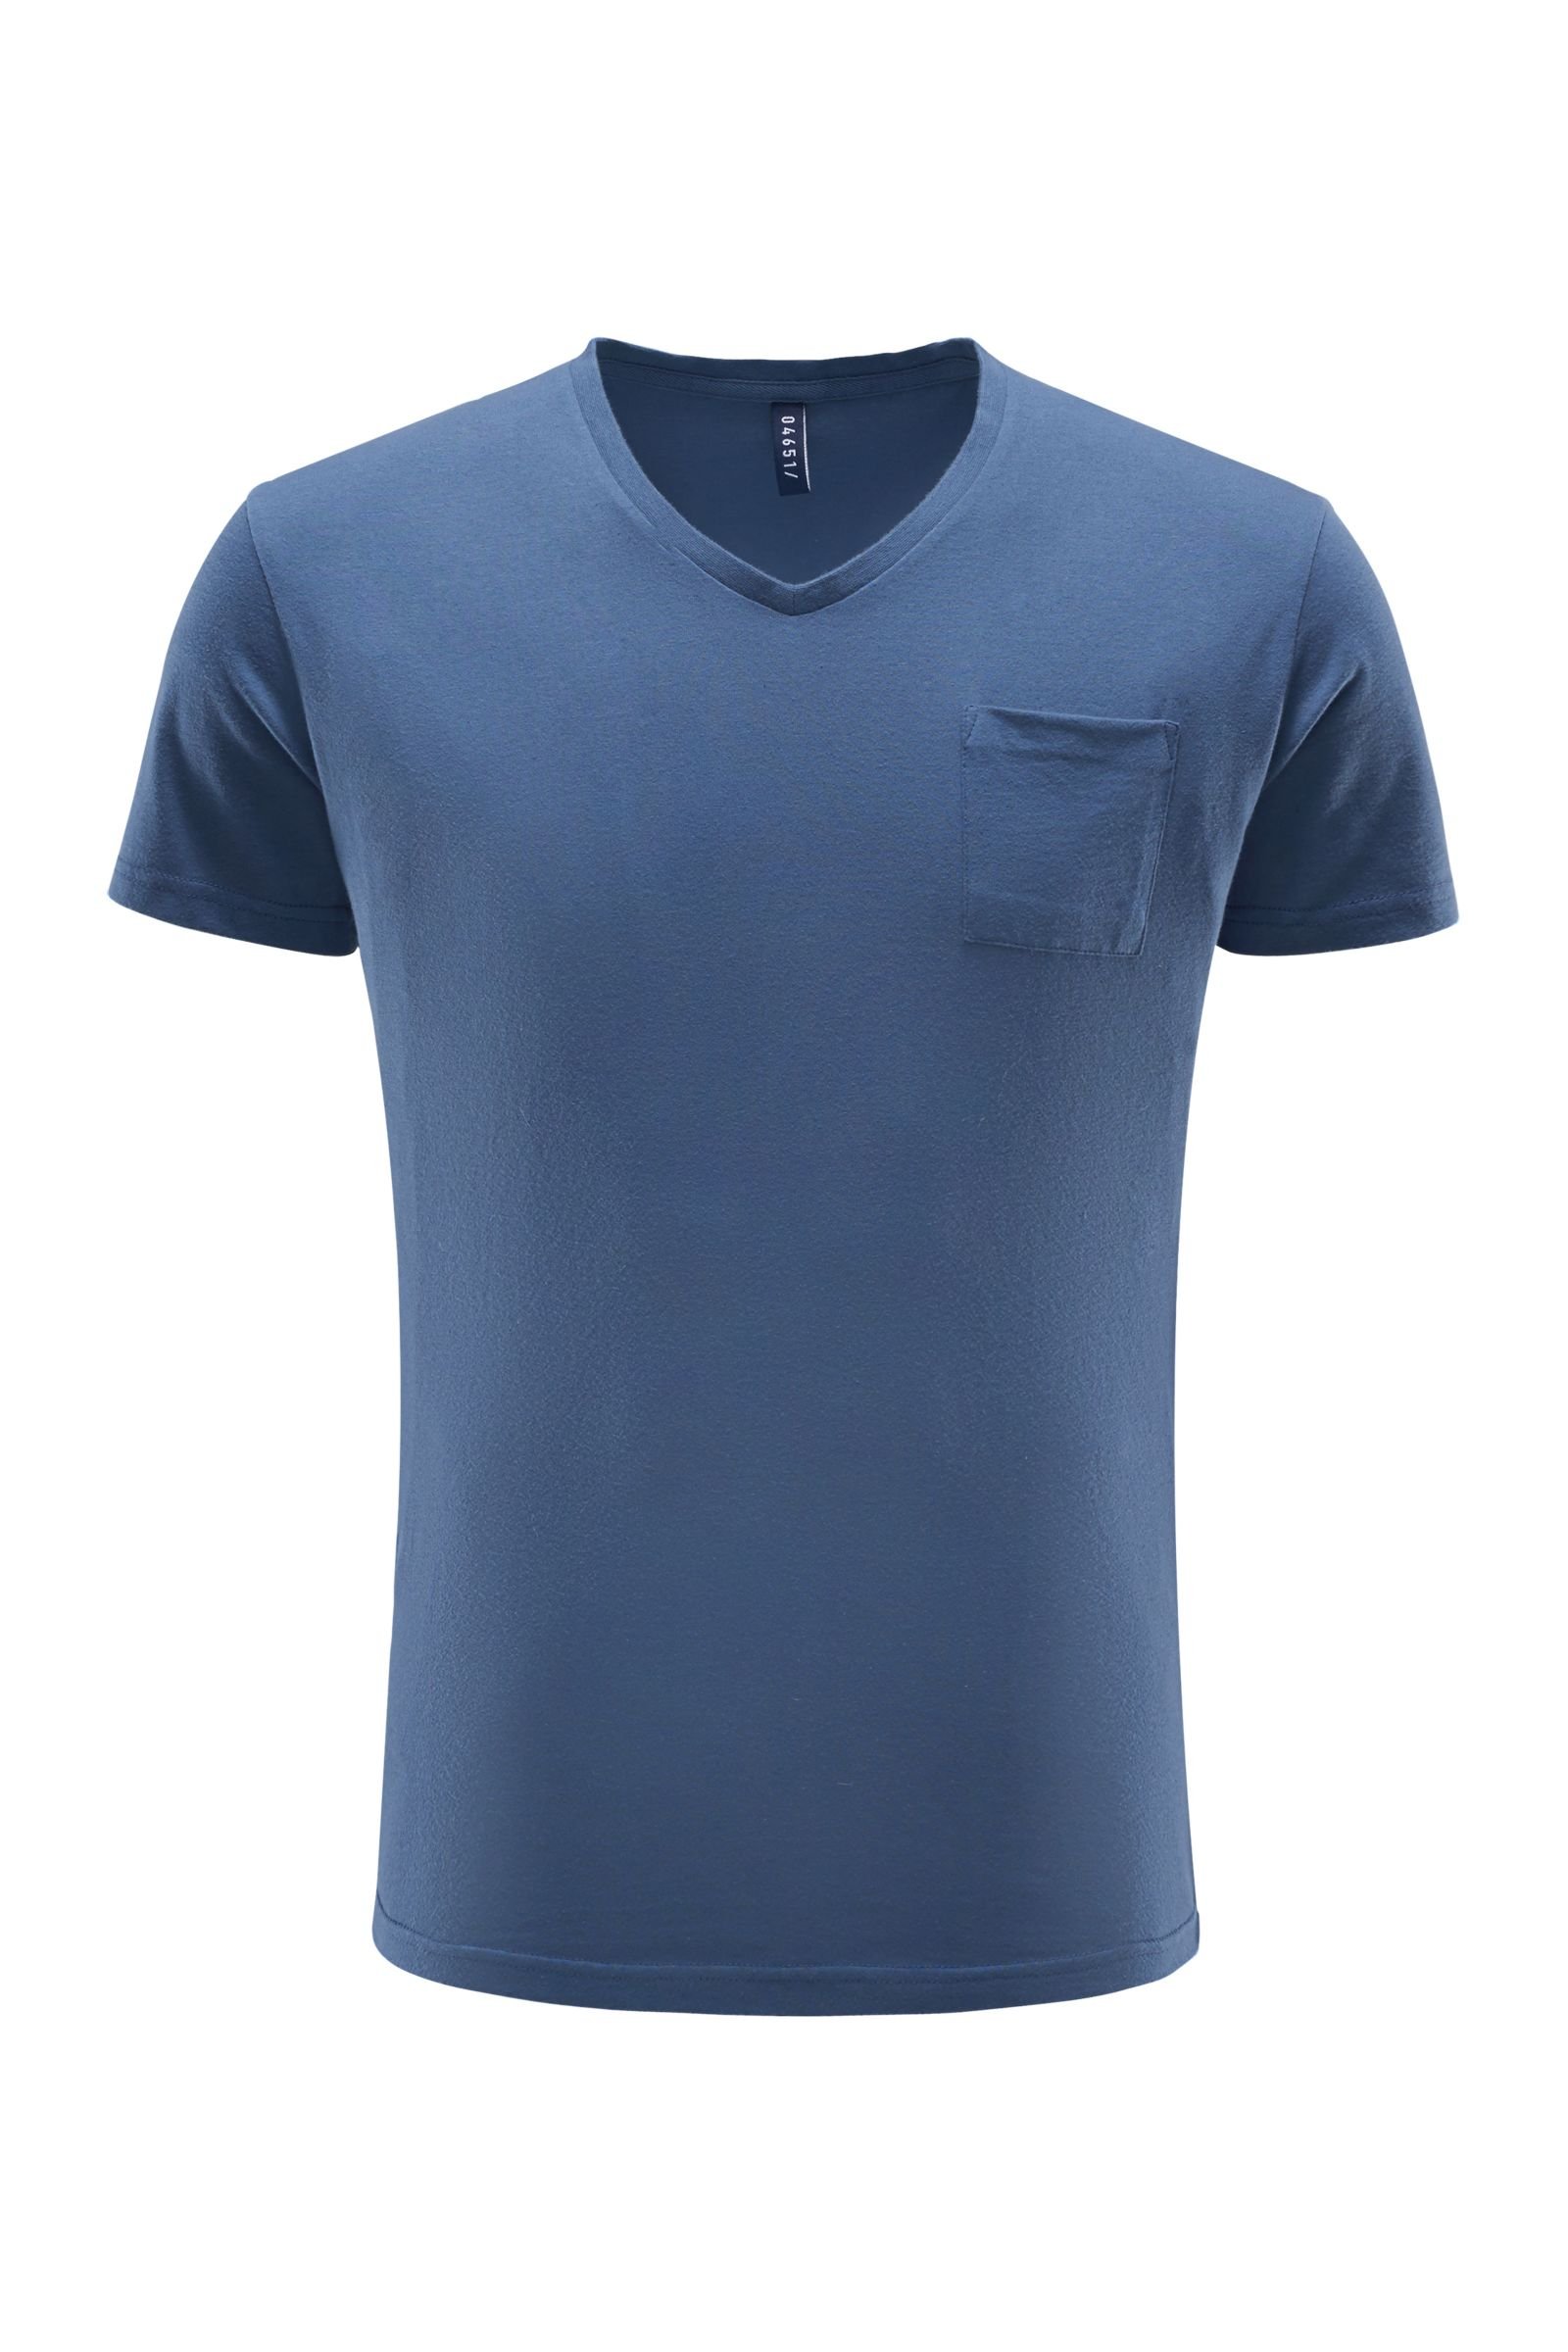 V-neck T-shirt grey-blue